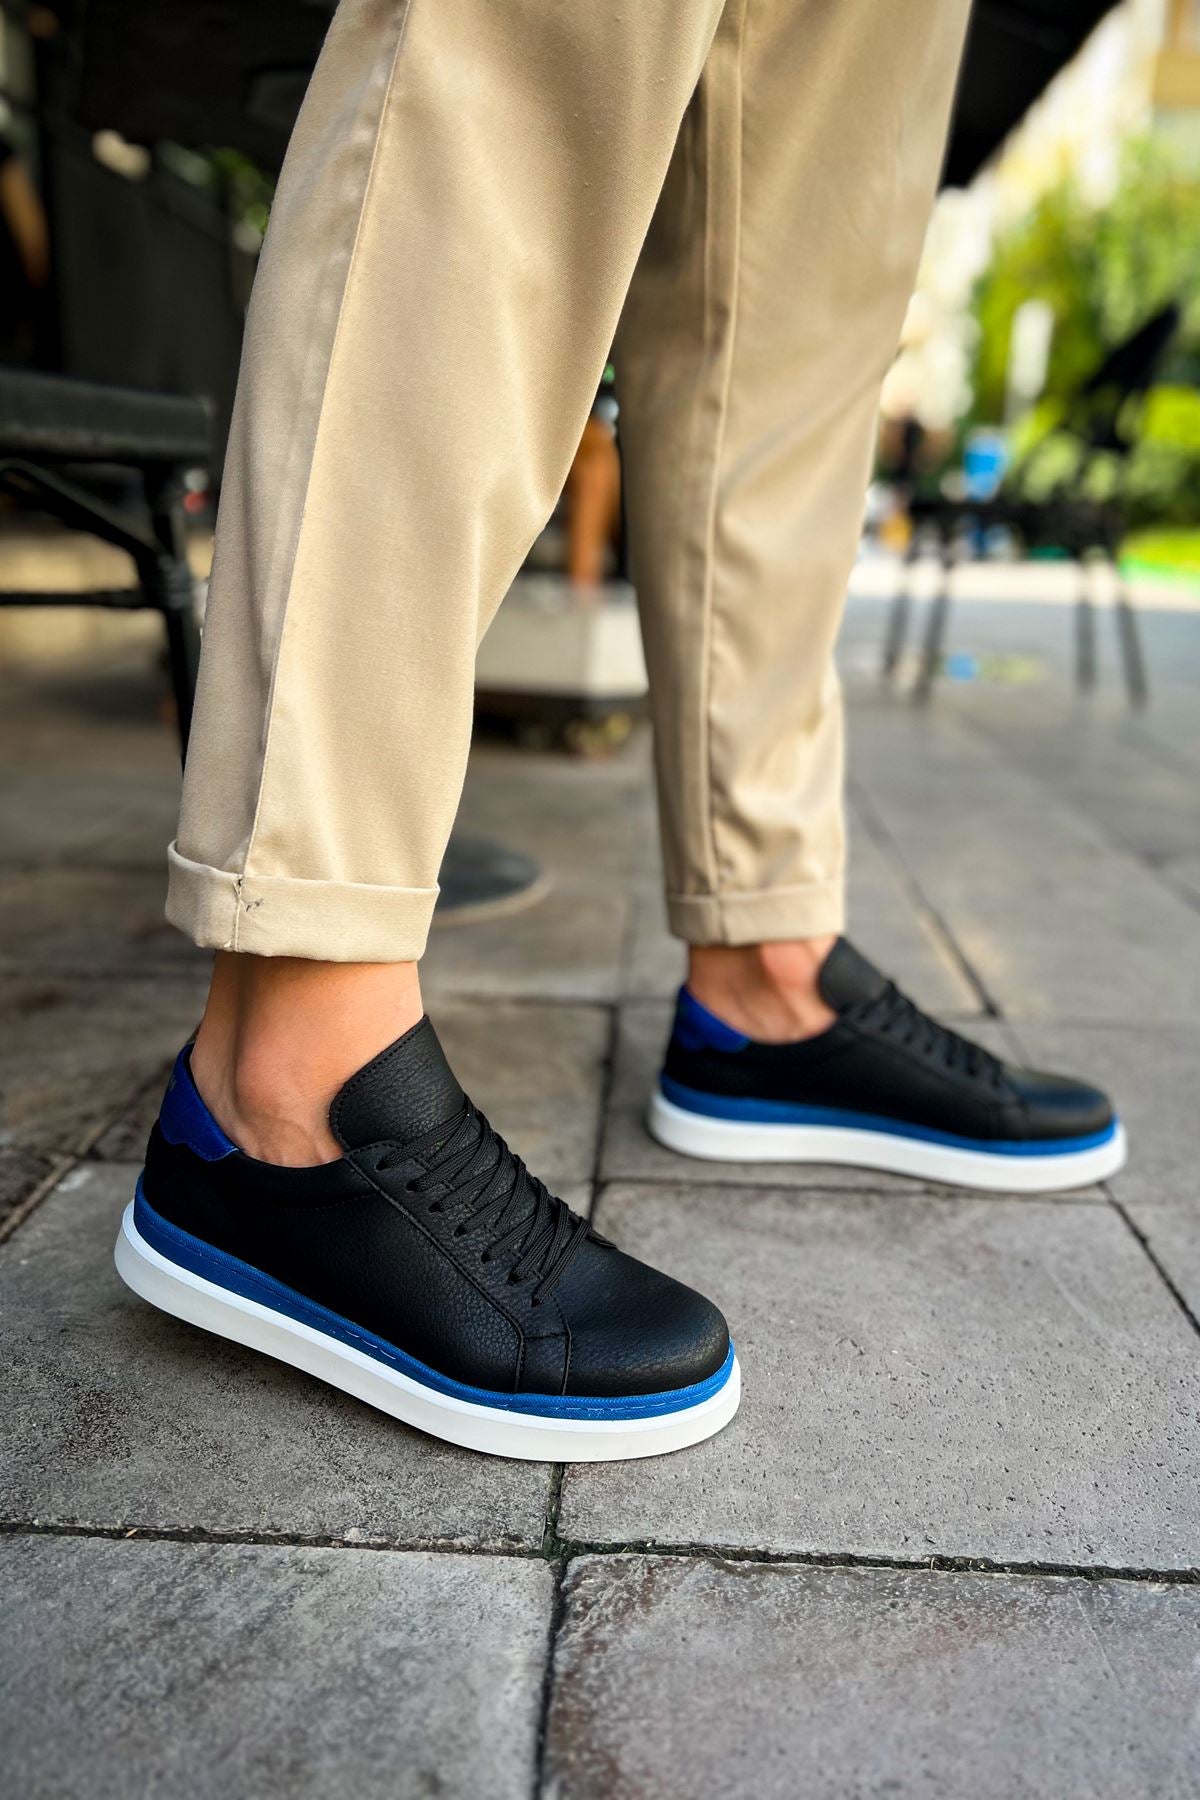 CH979 Santoni GBT Sport Men's Sneakers Shoes BLACK/BLUE - STREETMODE™